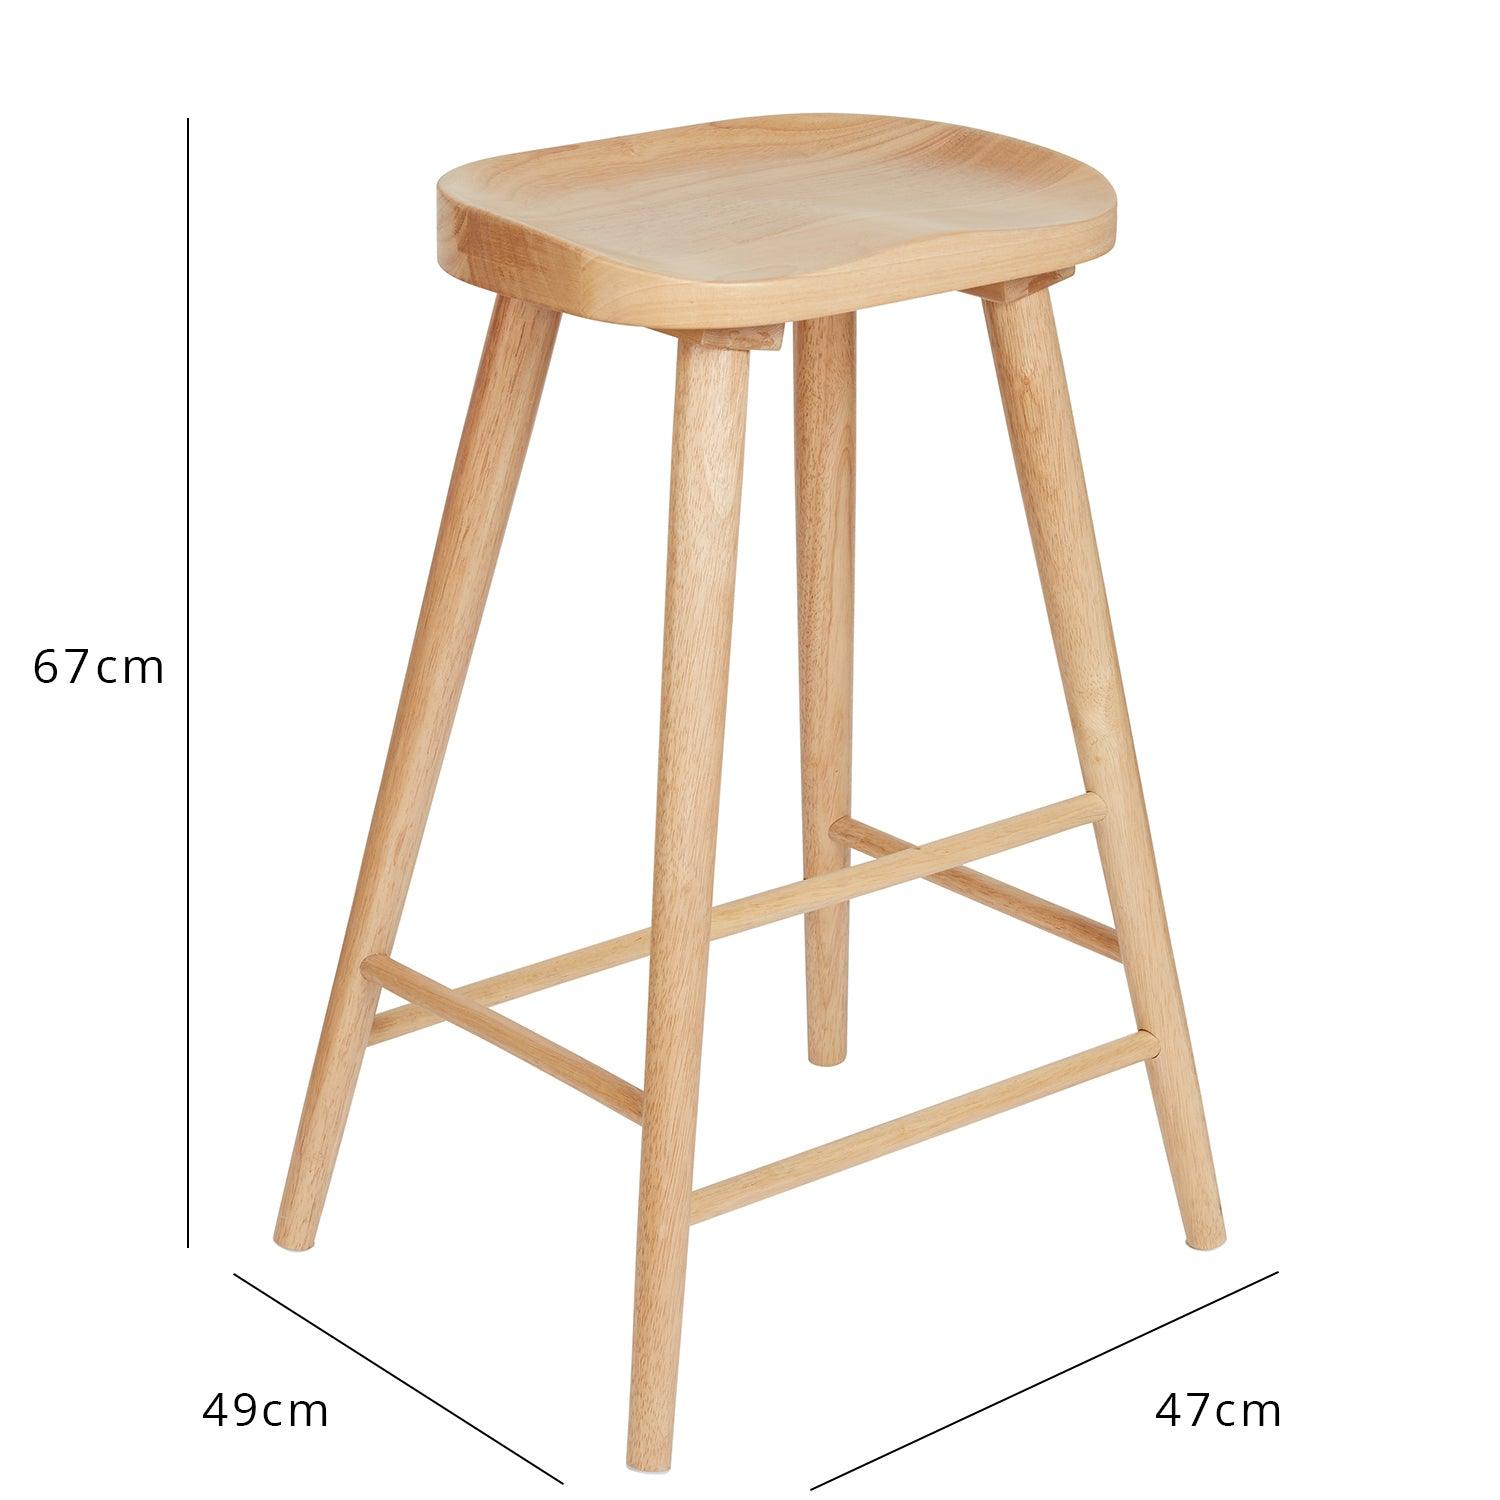 Silvester bar stool - natural wood finish - Laura James